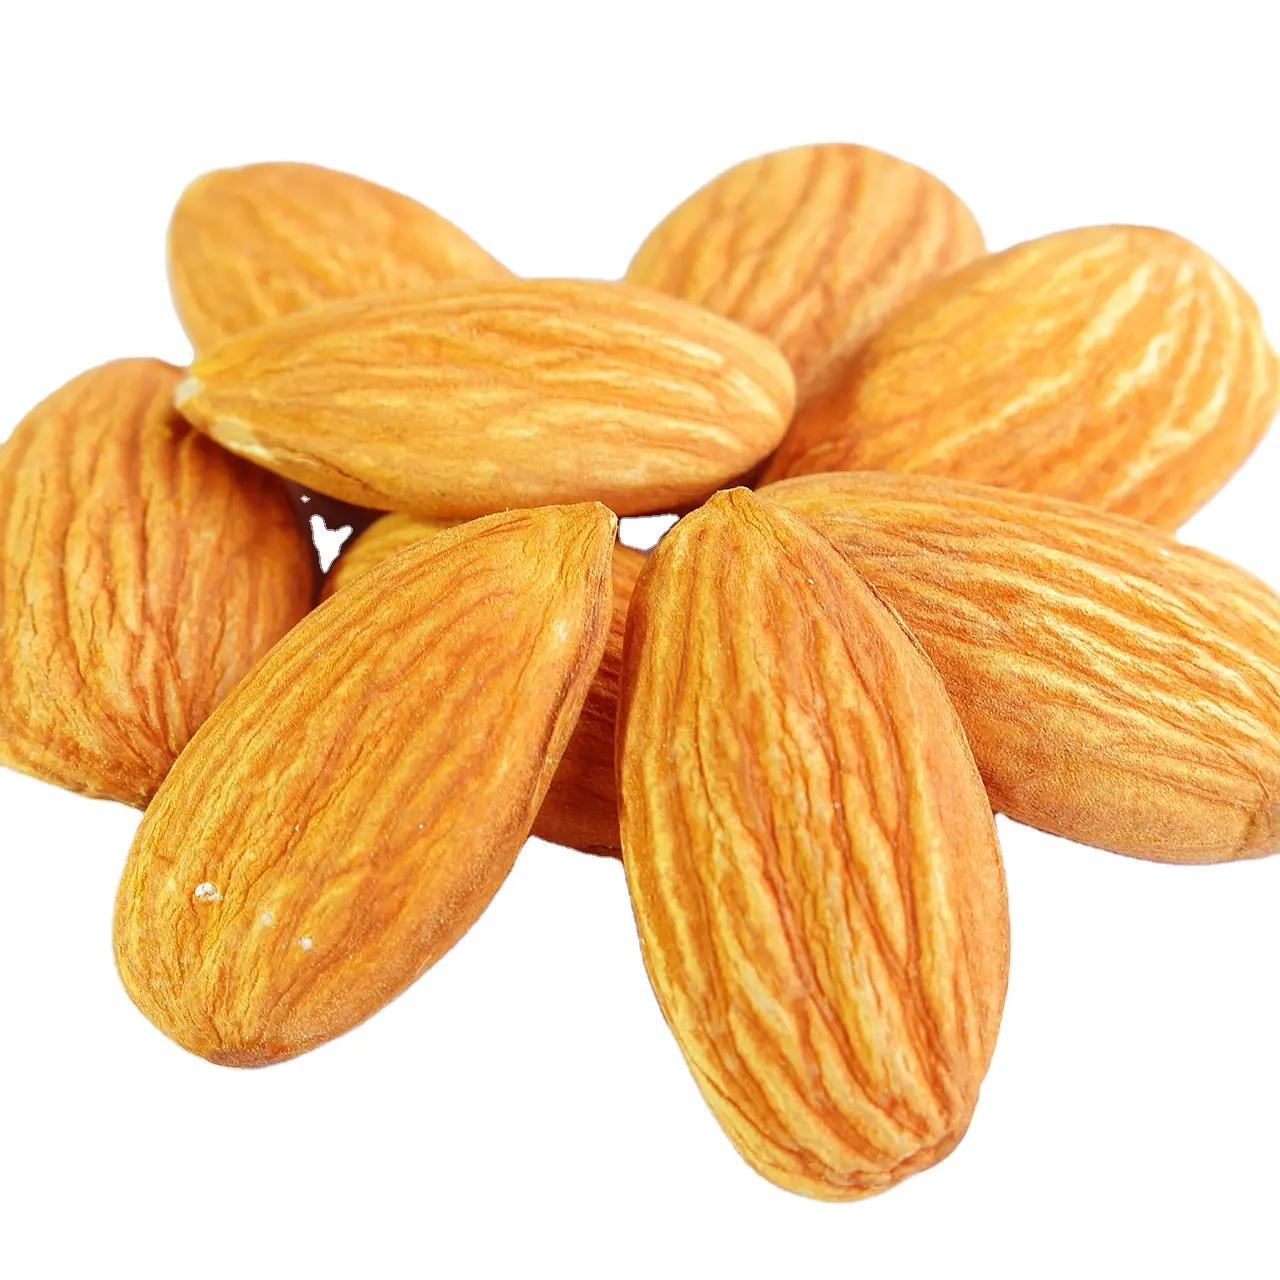 Sale Almonds - Almonds Raw Wholesale Nuts